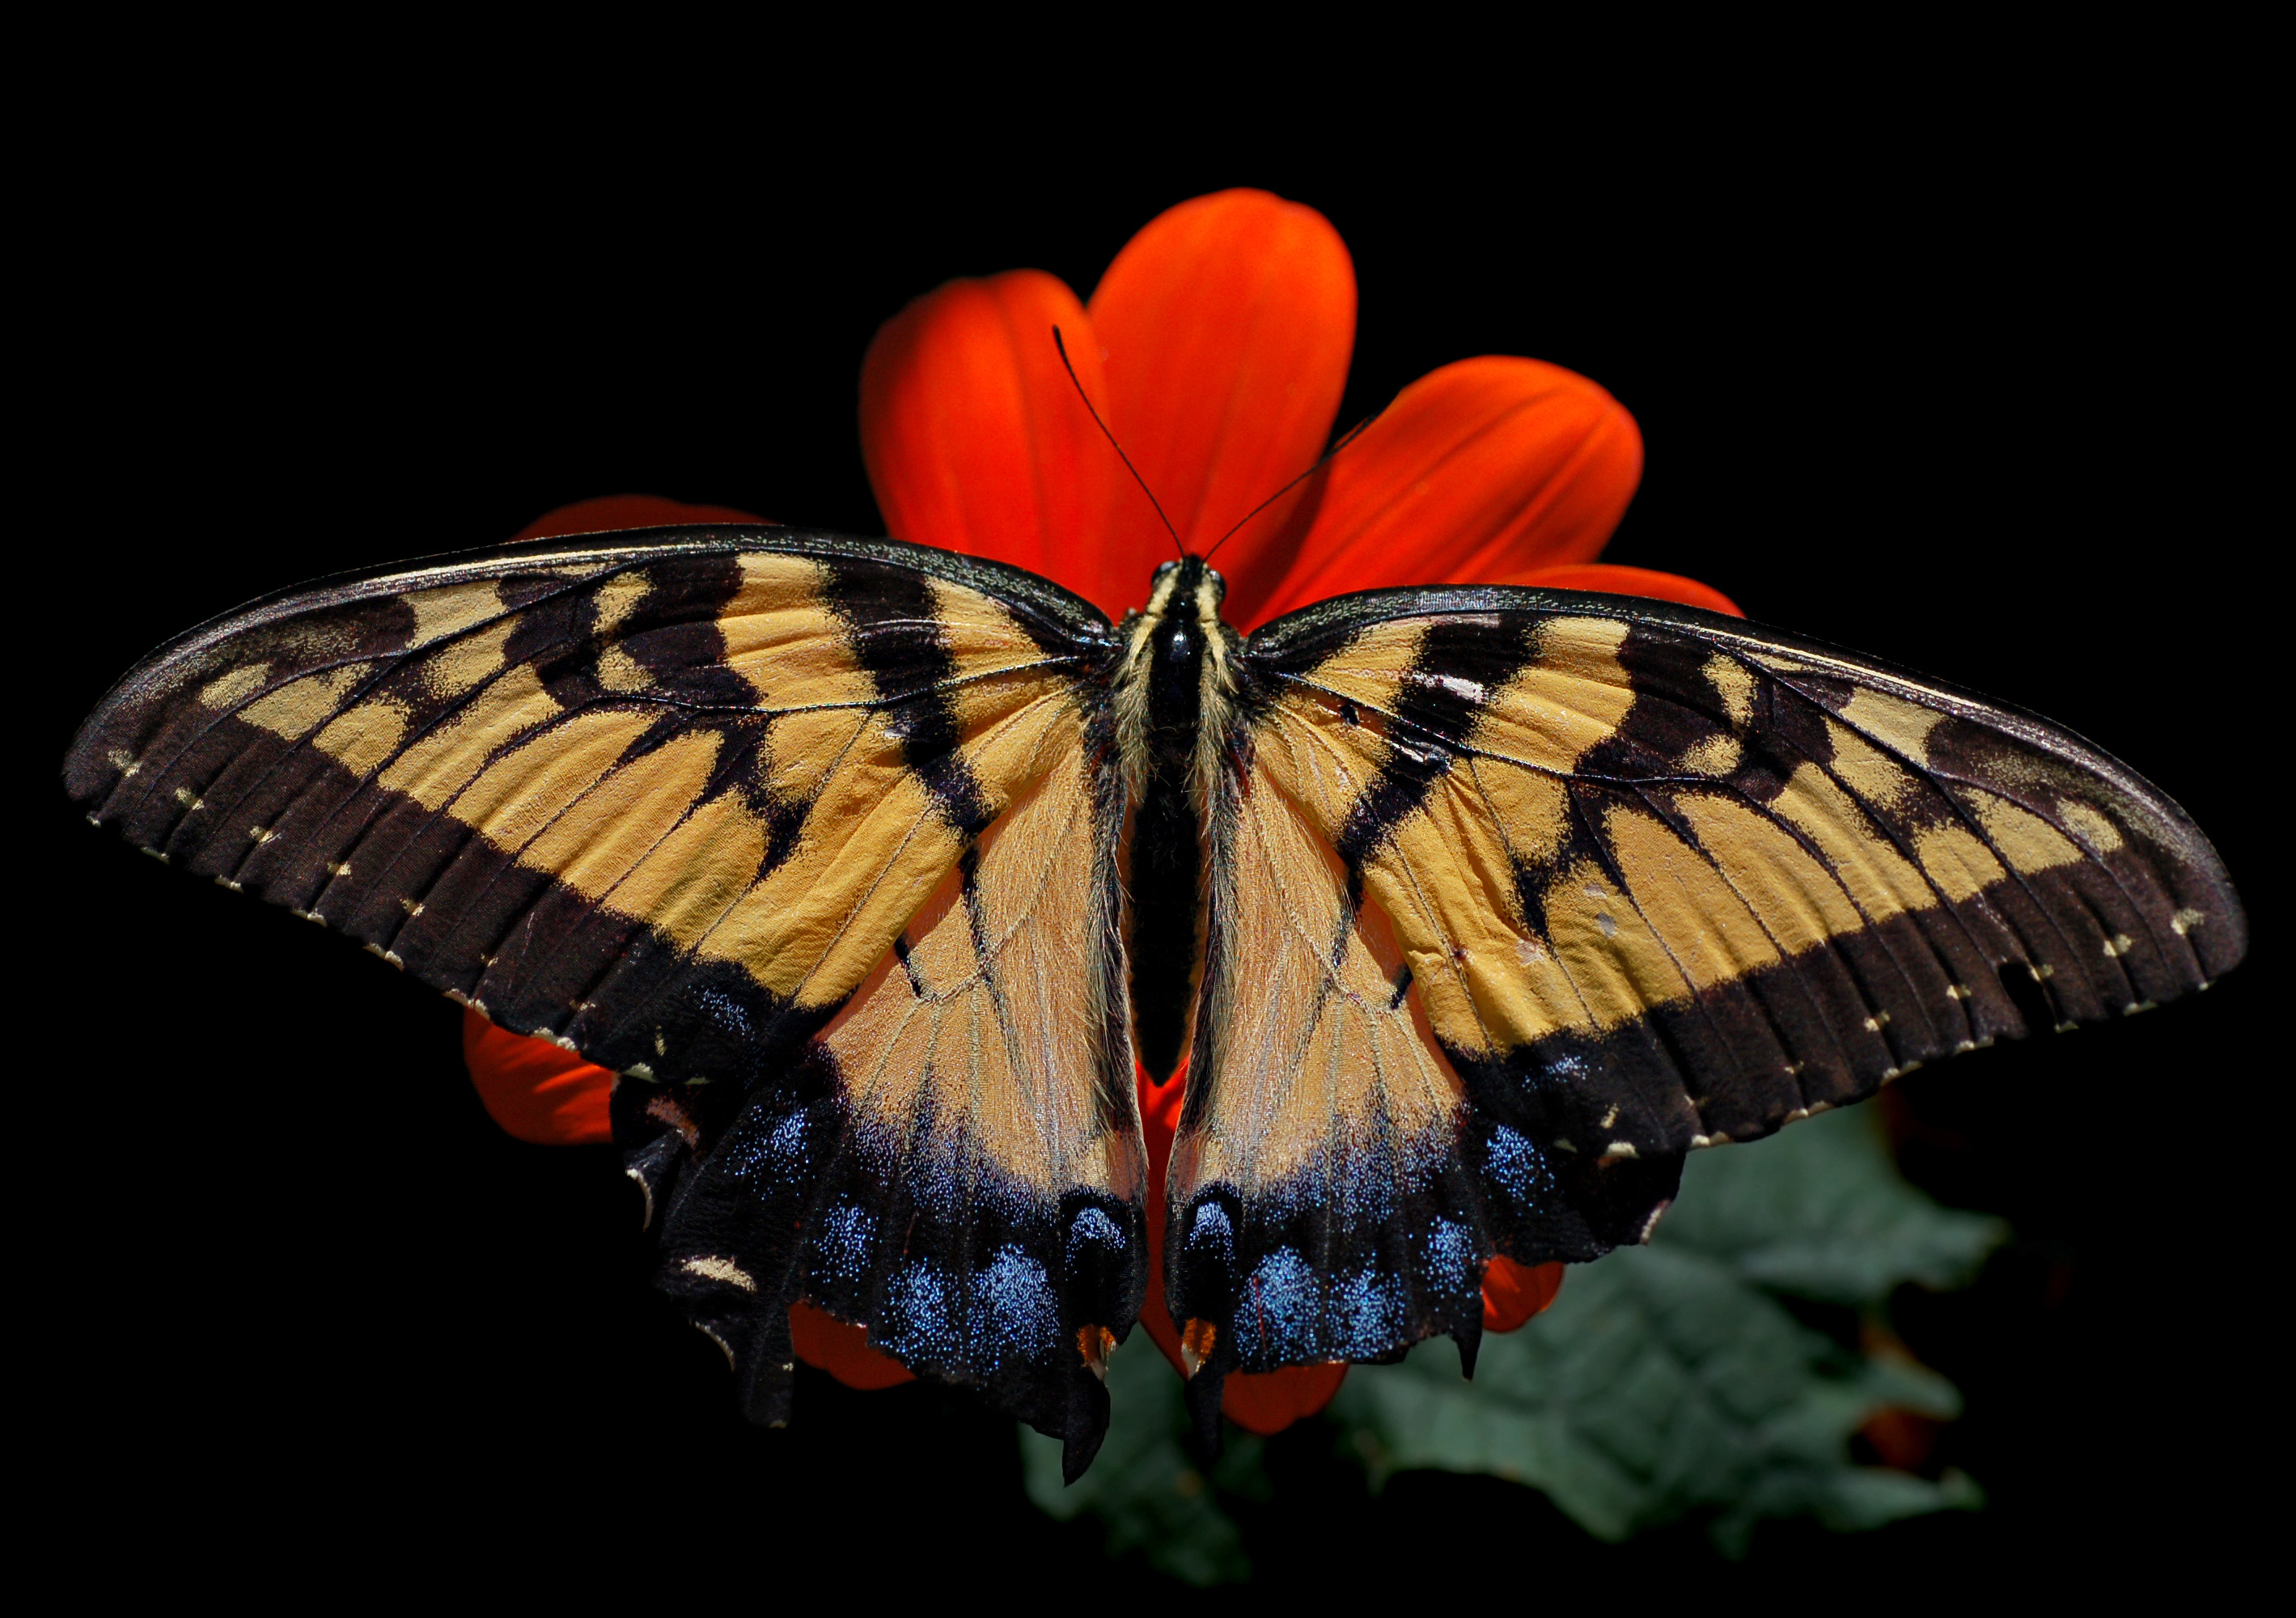 Eastern Tiger Swallowtail by Derek Ramsey